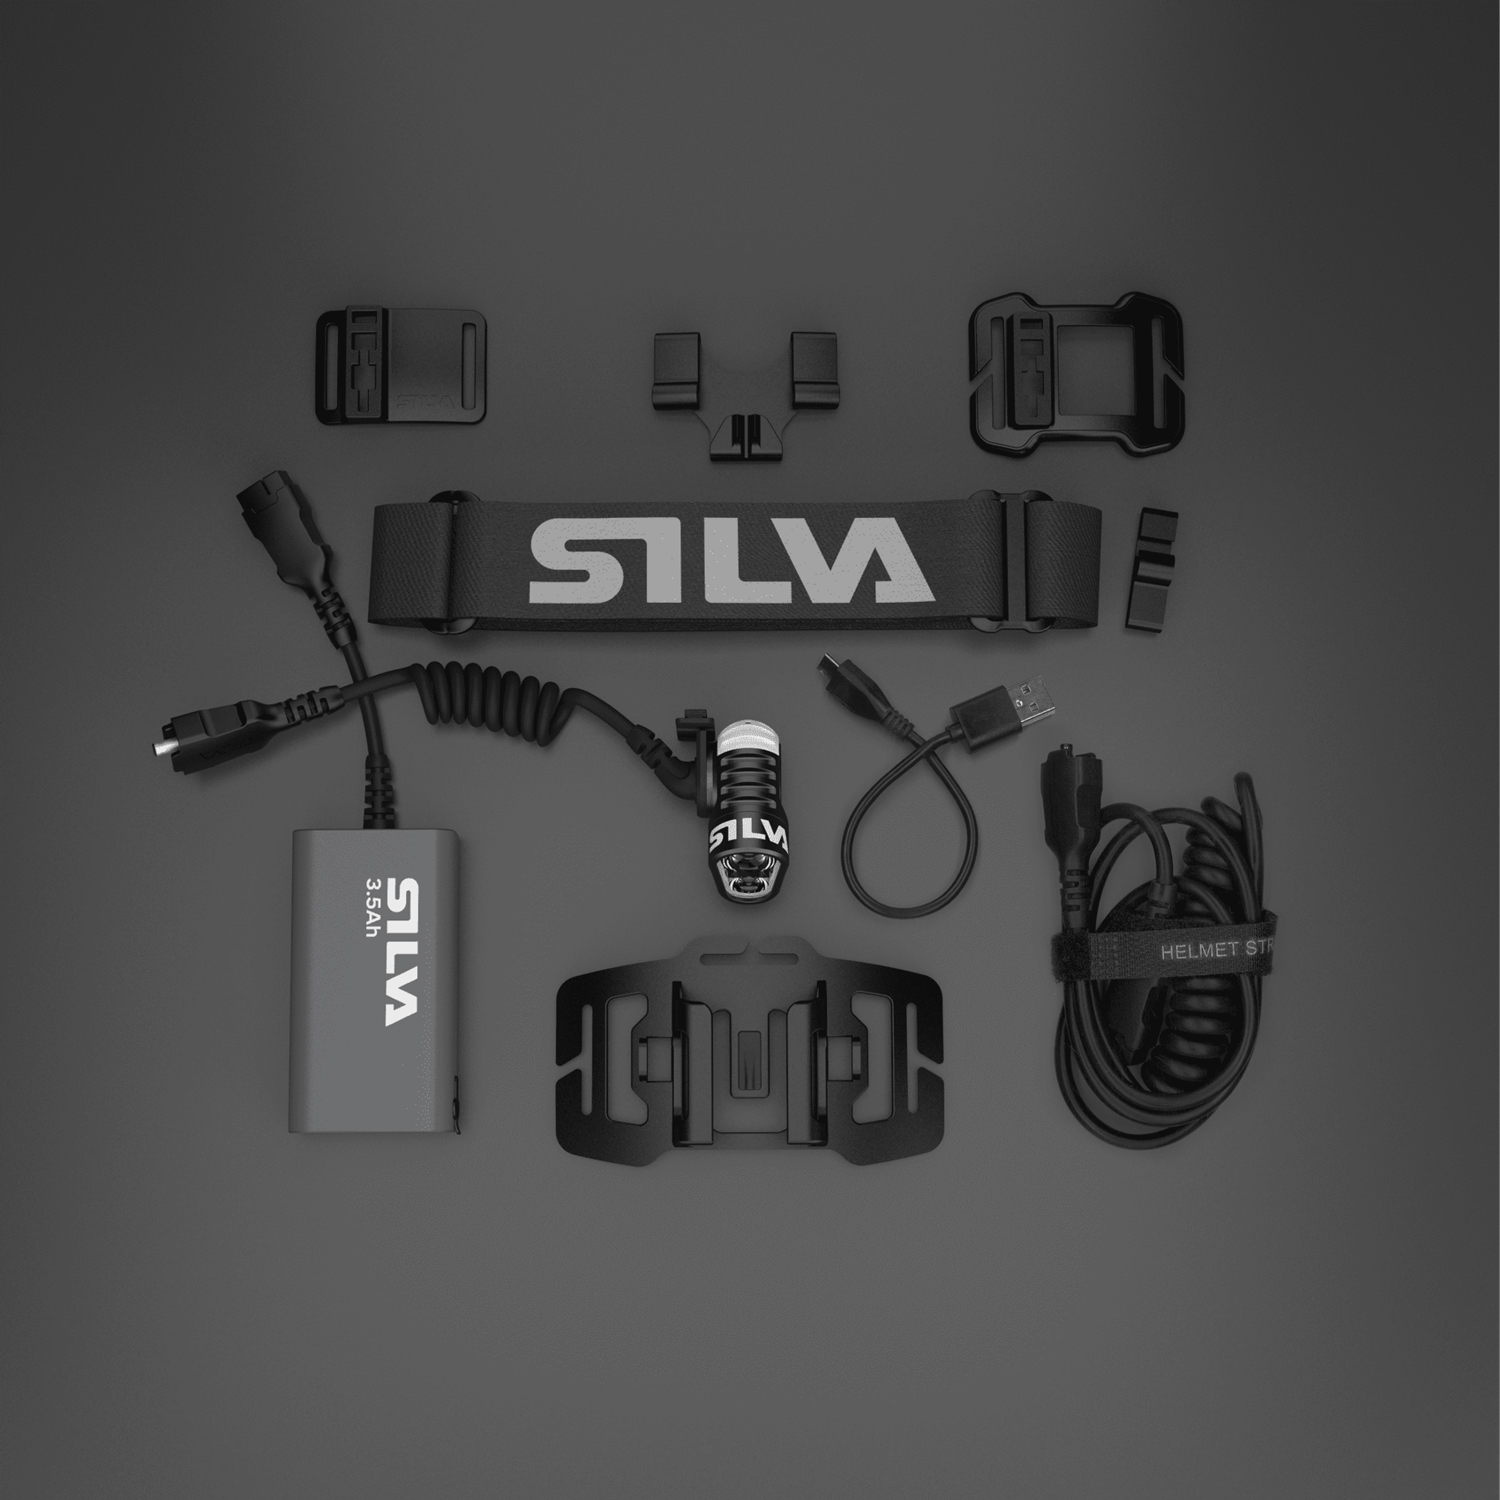 Silva Trail Speed 5X - obsah balení